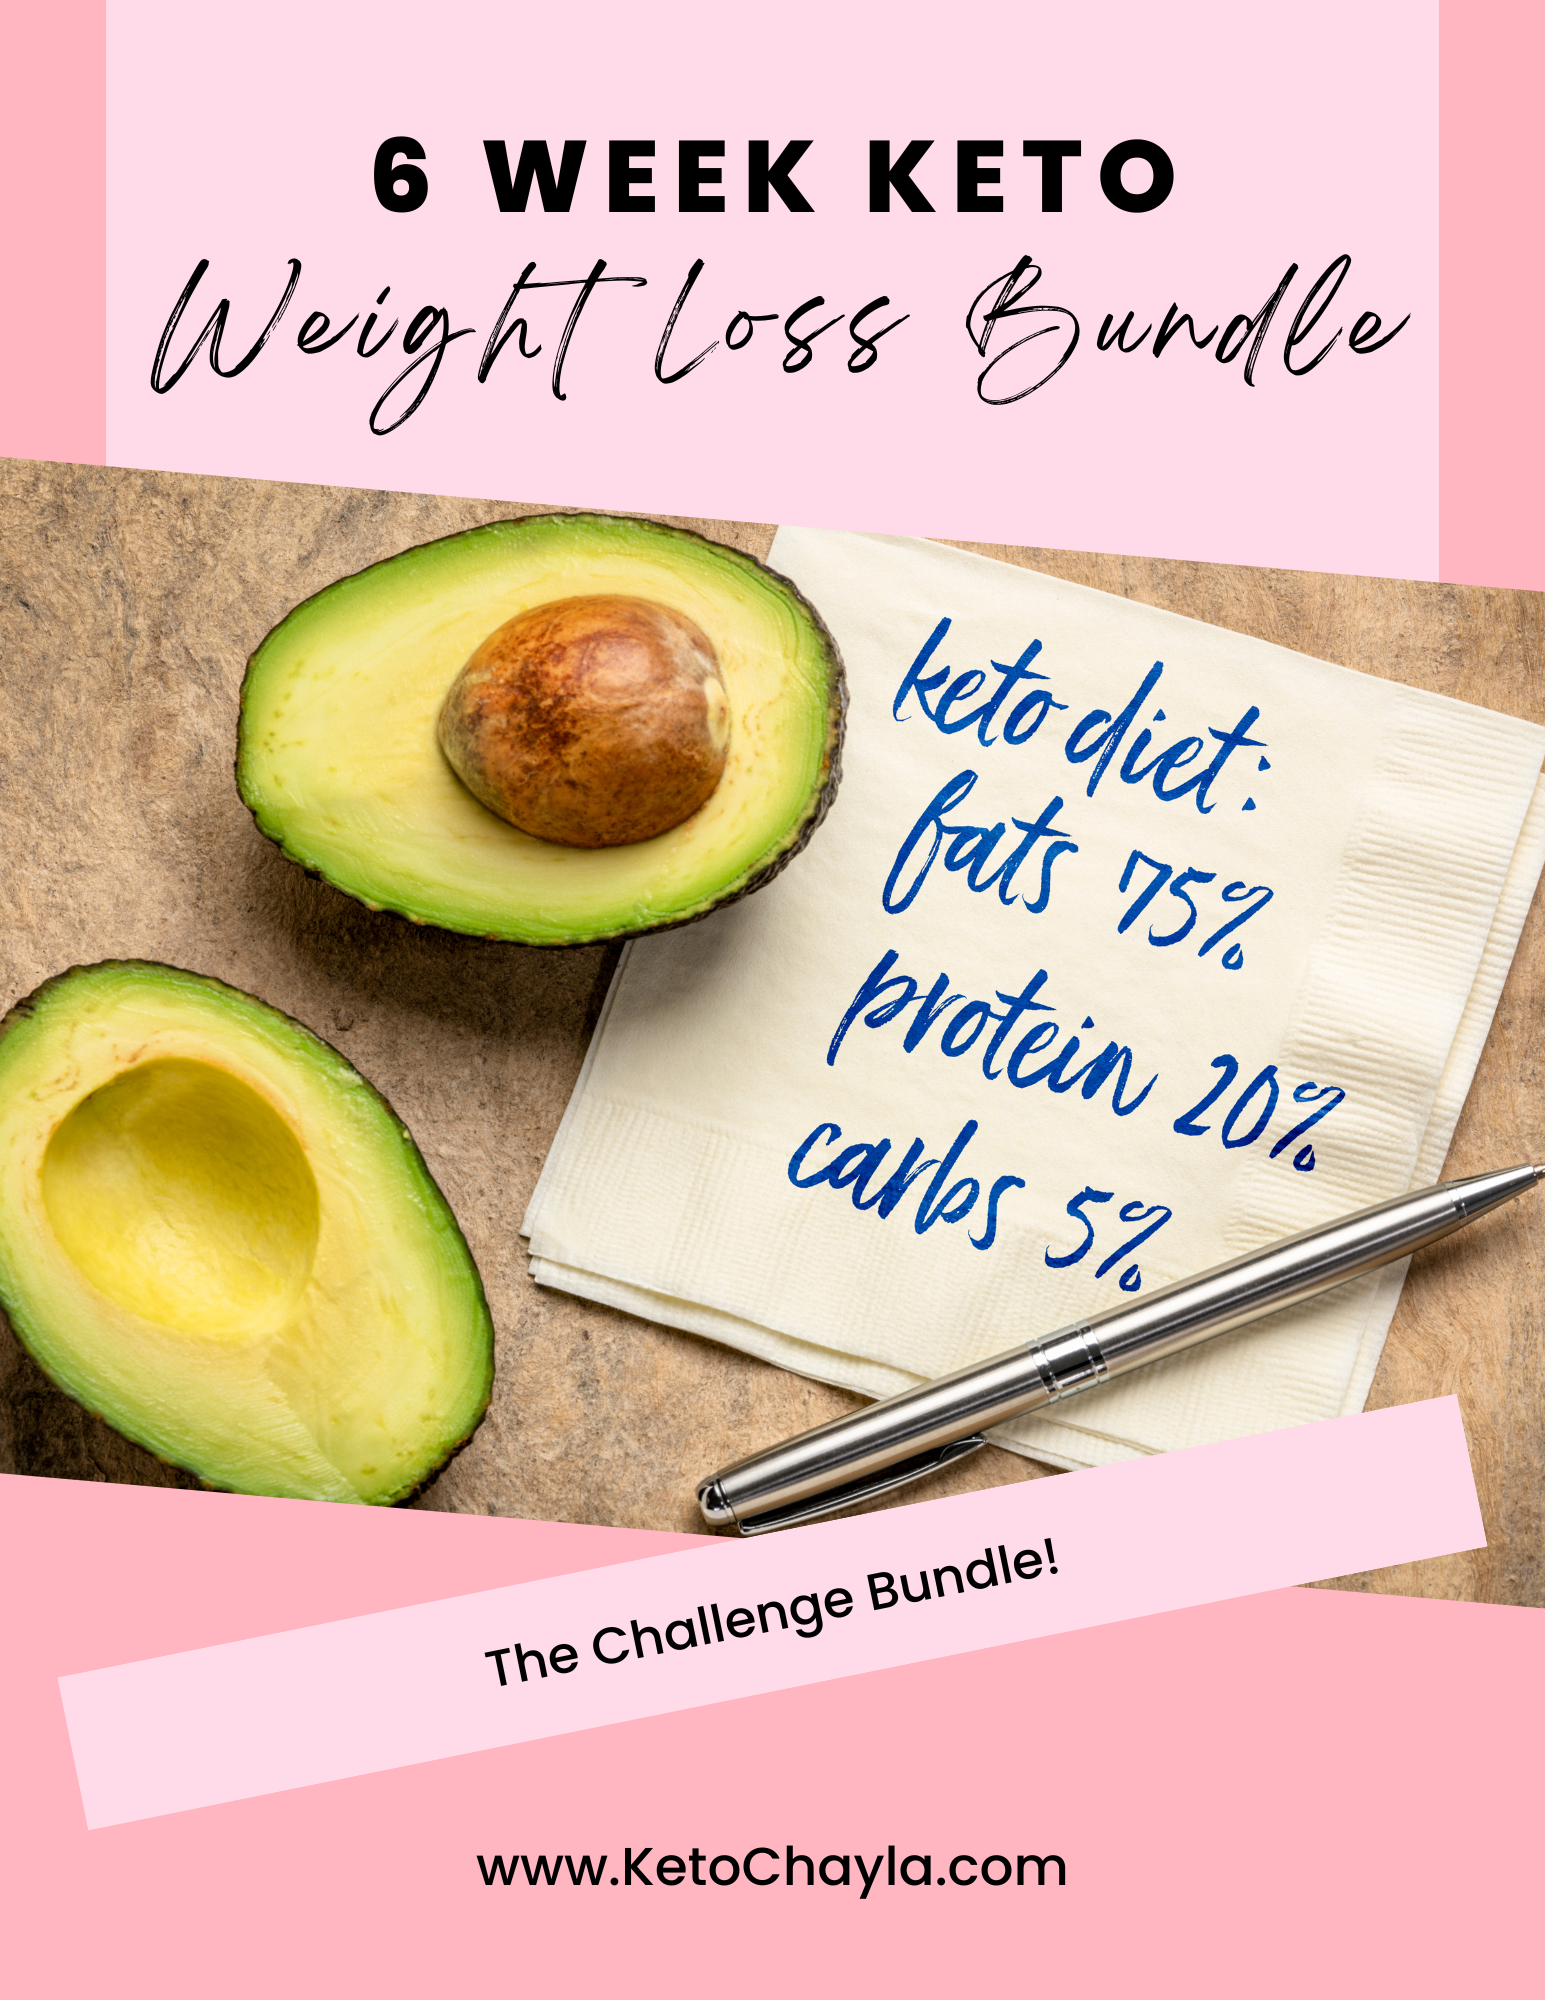 6 Week Keto Weight Loss Challenge Bundle